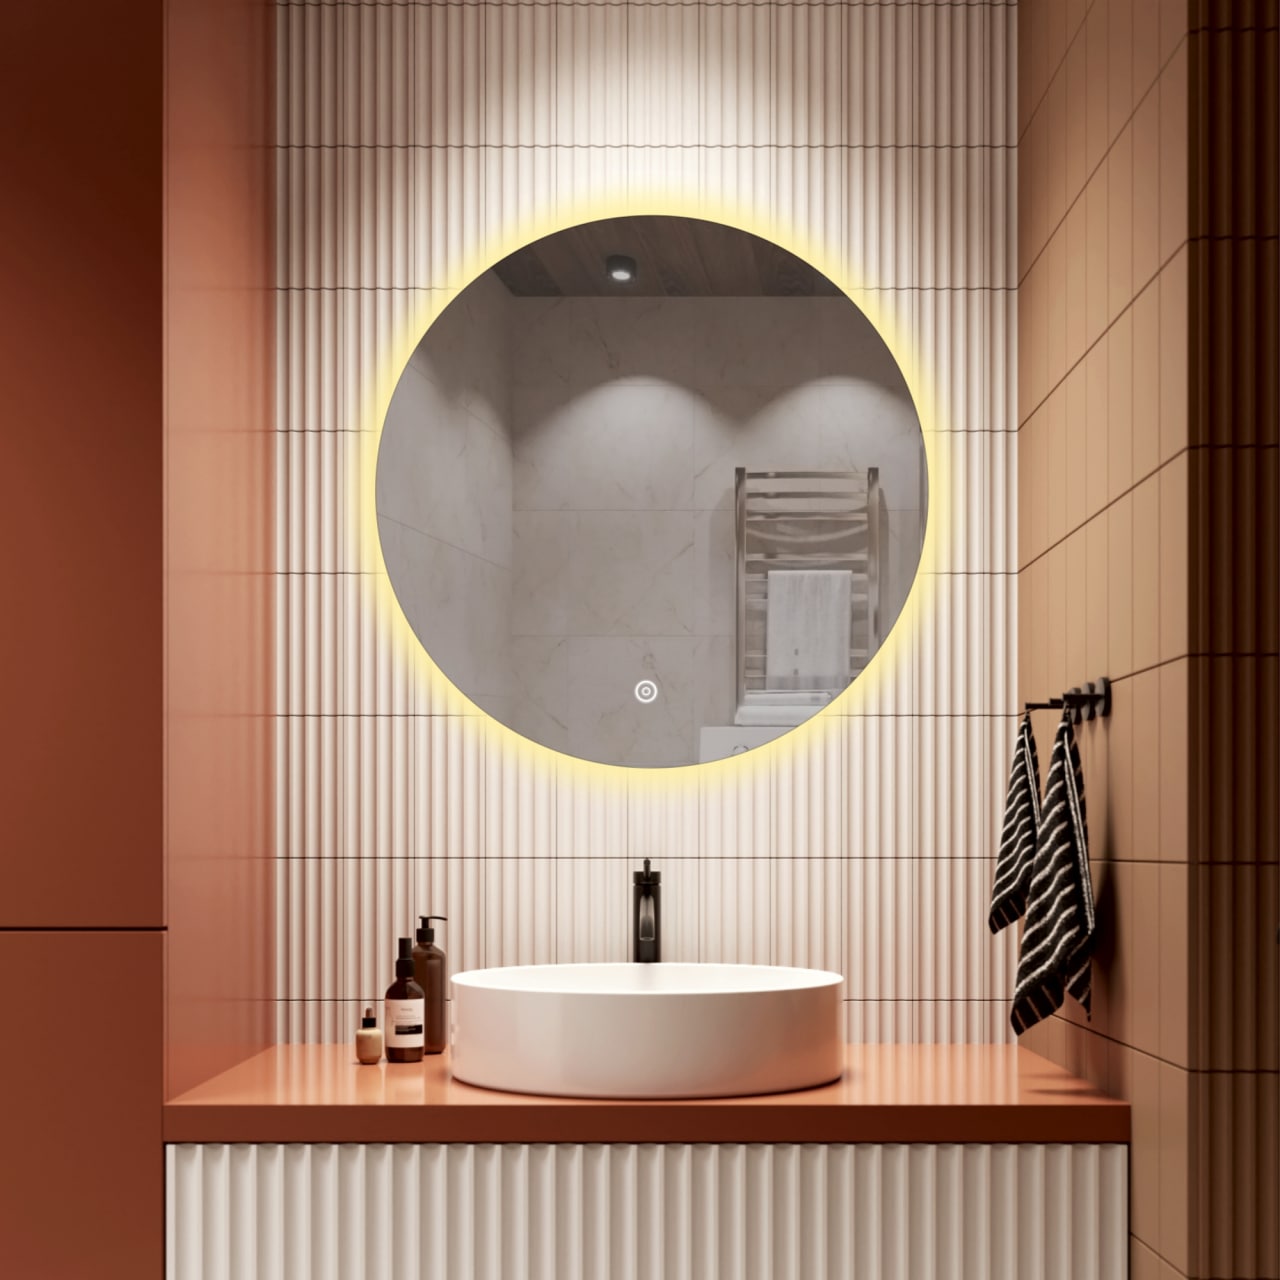 Зеркало для ванной Alfa Mirrors с теплой подсветкой 3200К круглое 80см, арт. Na-8Na-8t зеркало с подсветкой настенное круглое silver mirrors fantom 77 см с bluetooth